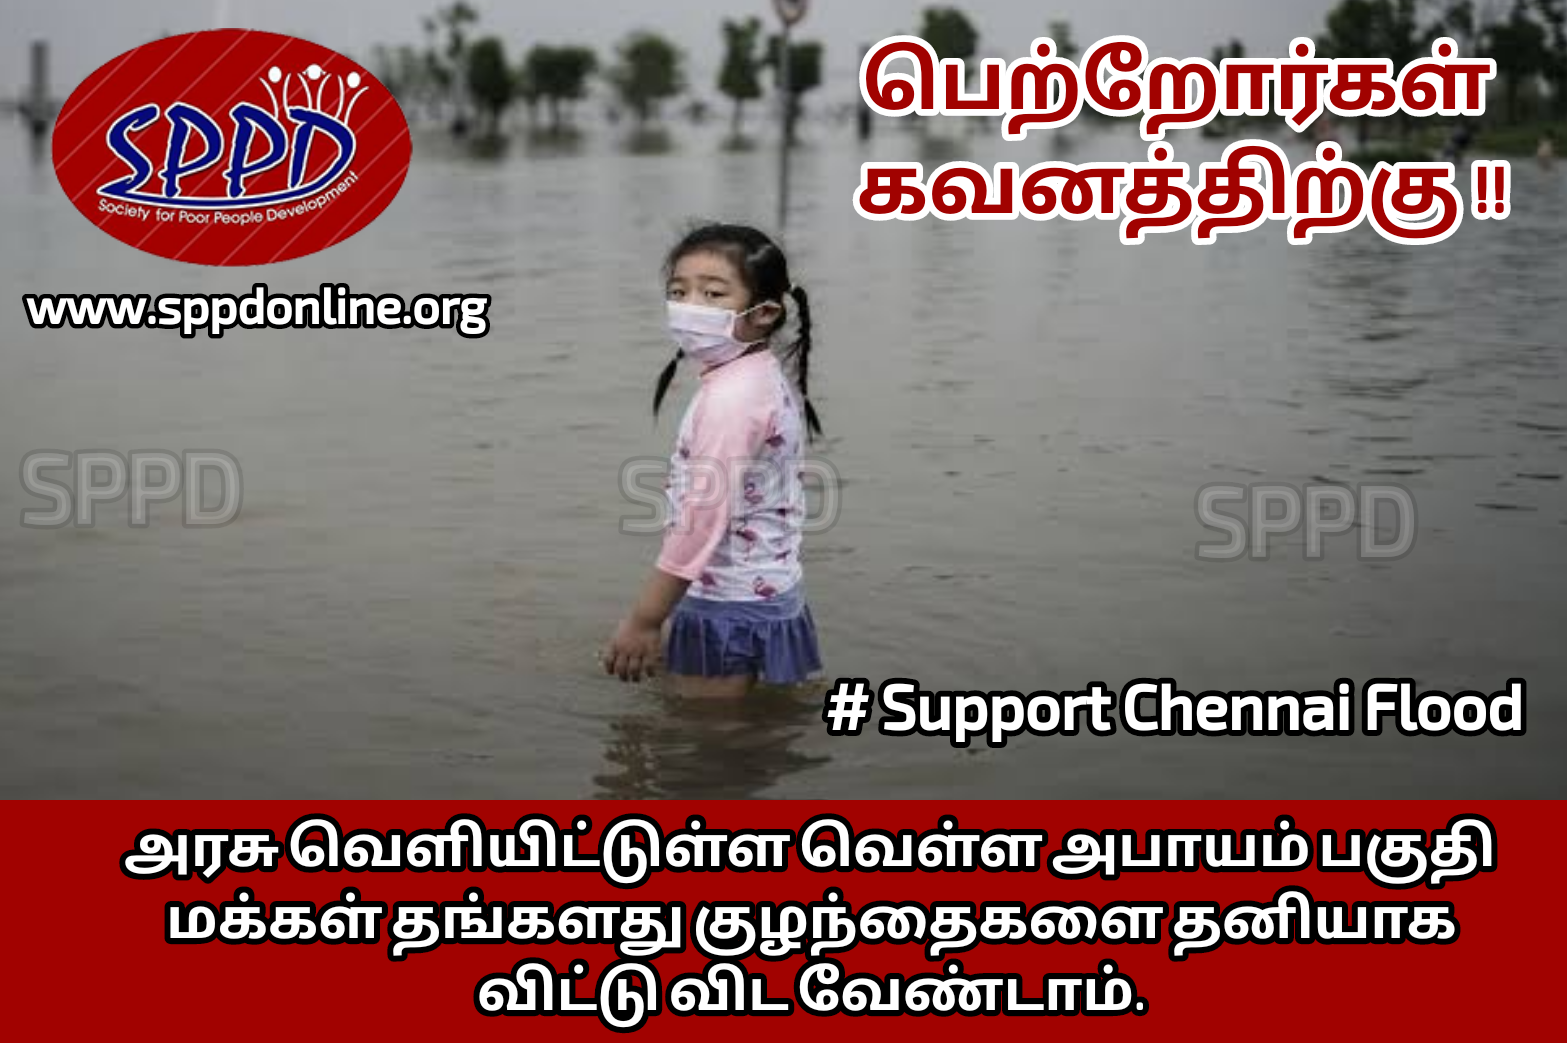 Support Chennai Flood  